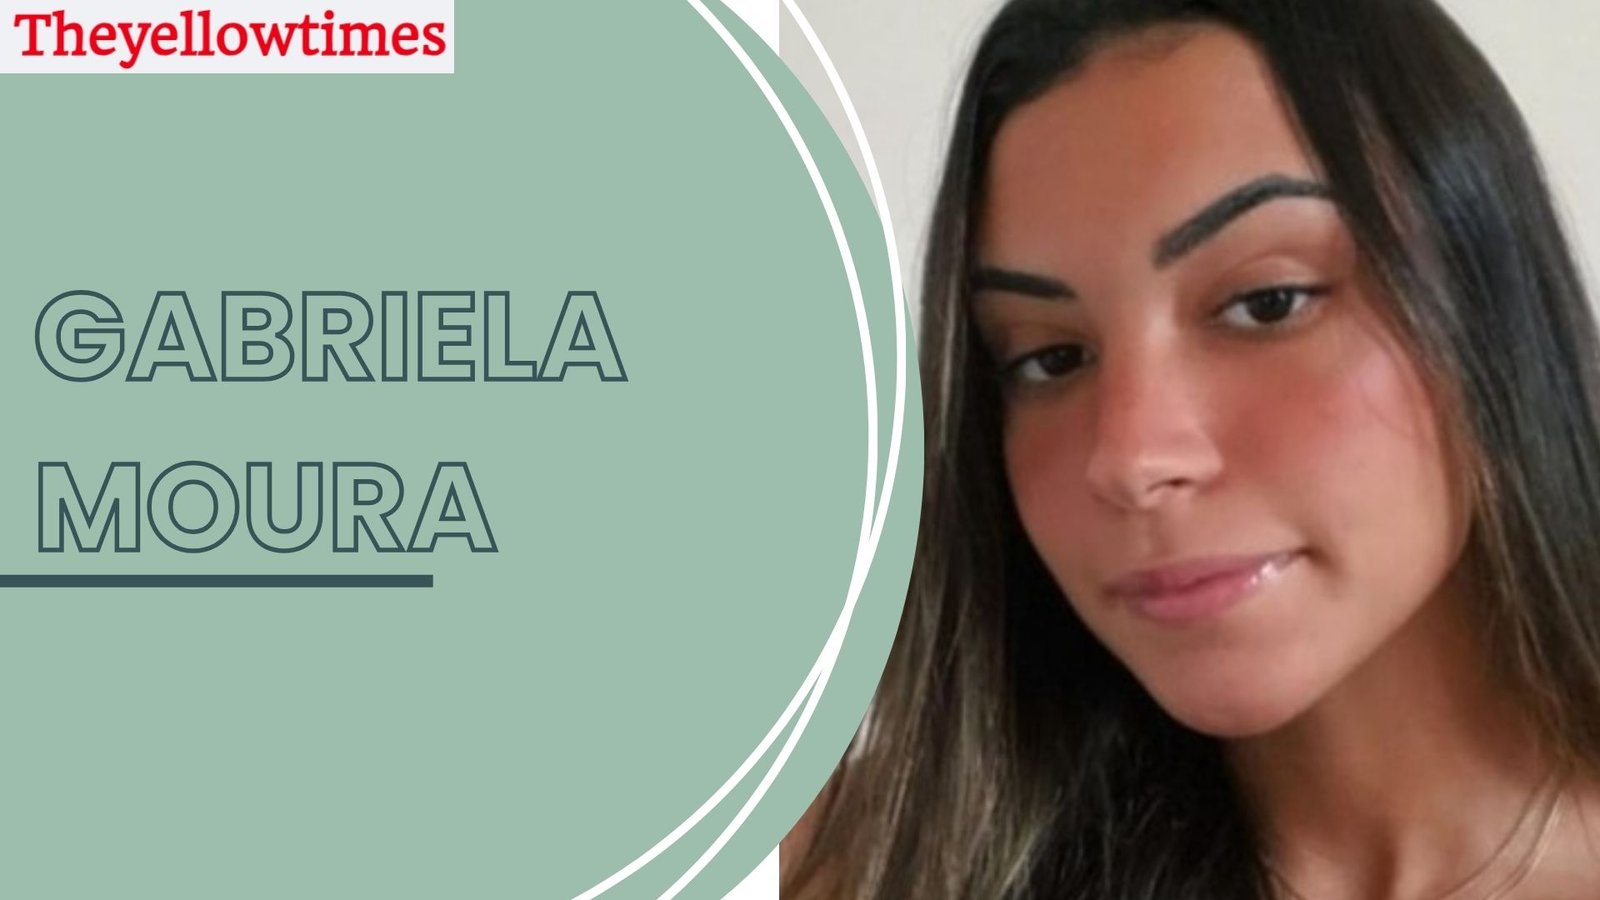 Gabriela Moura Biography, Career, Social Media, Net Worth and More